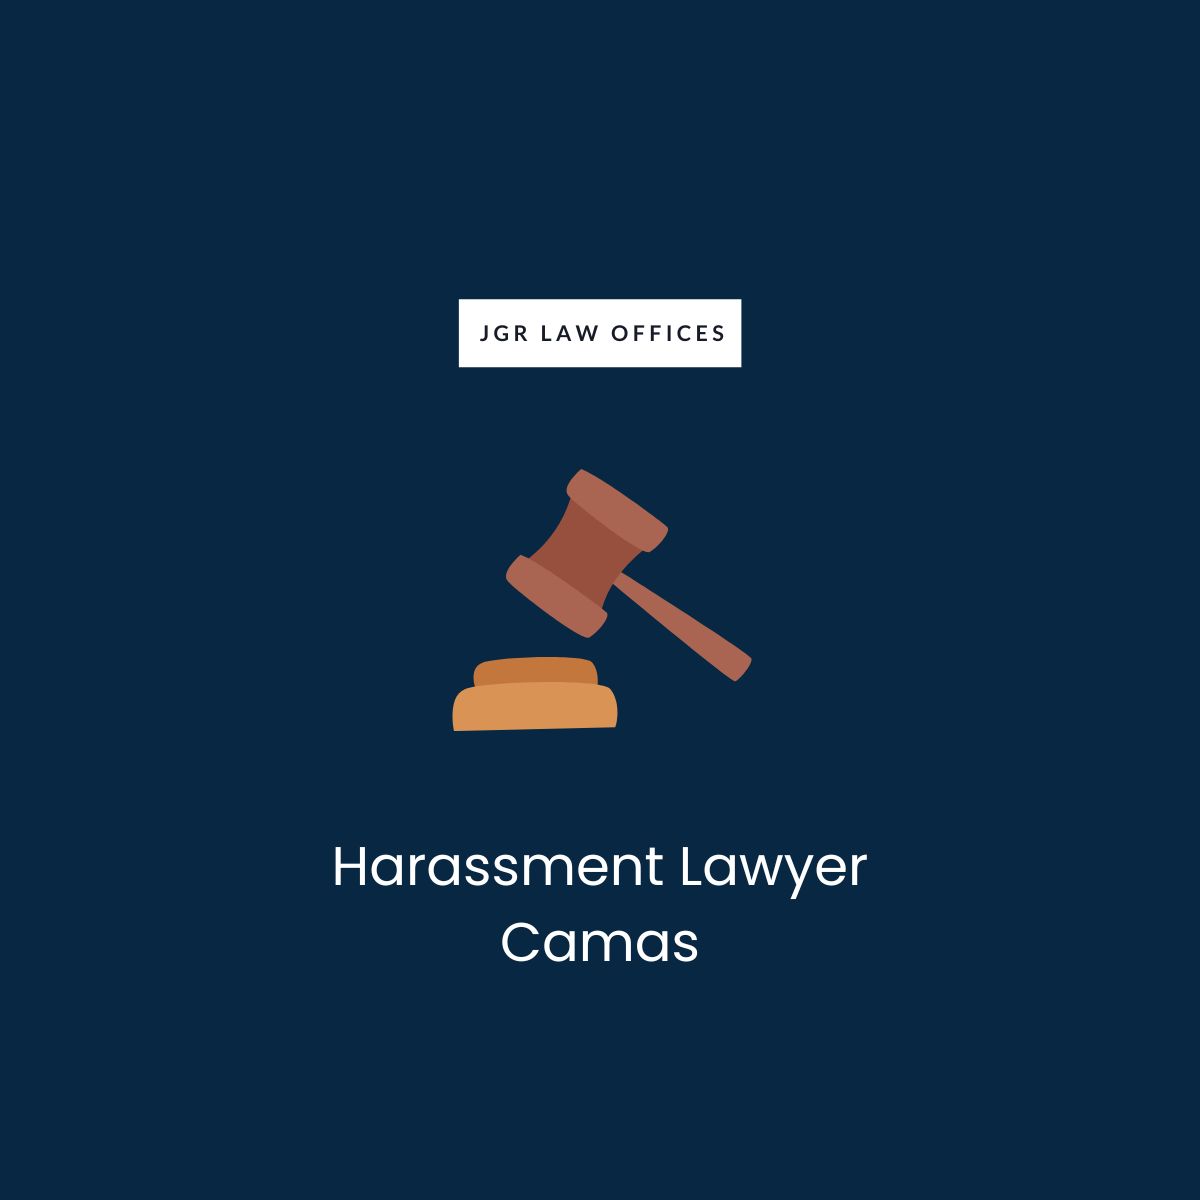 Harassment Lawyer Camas Harassment